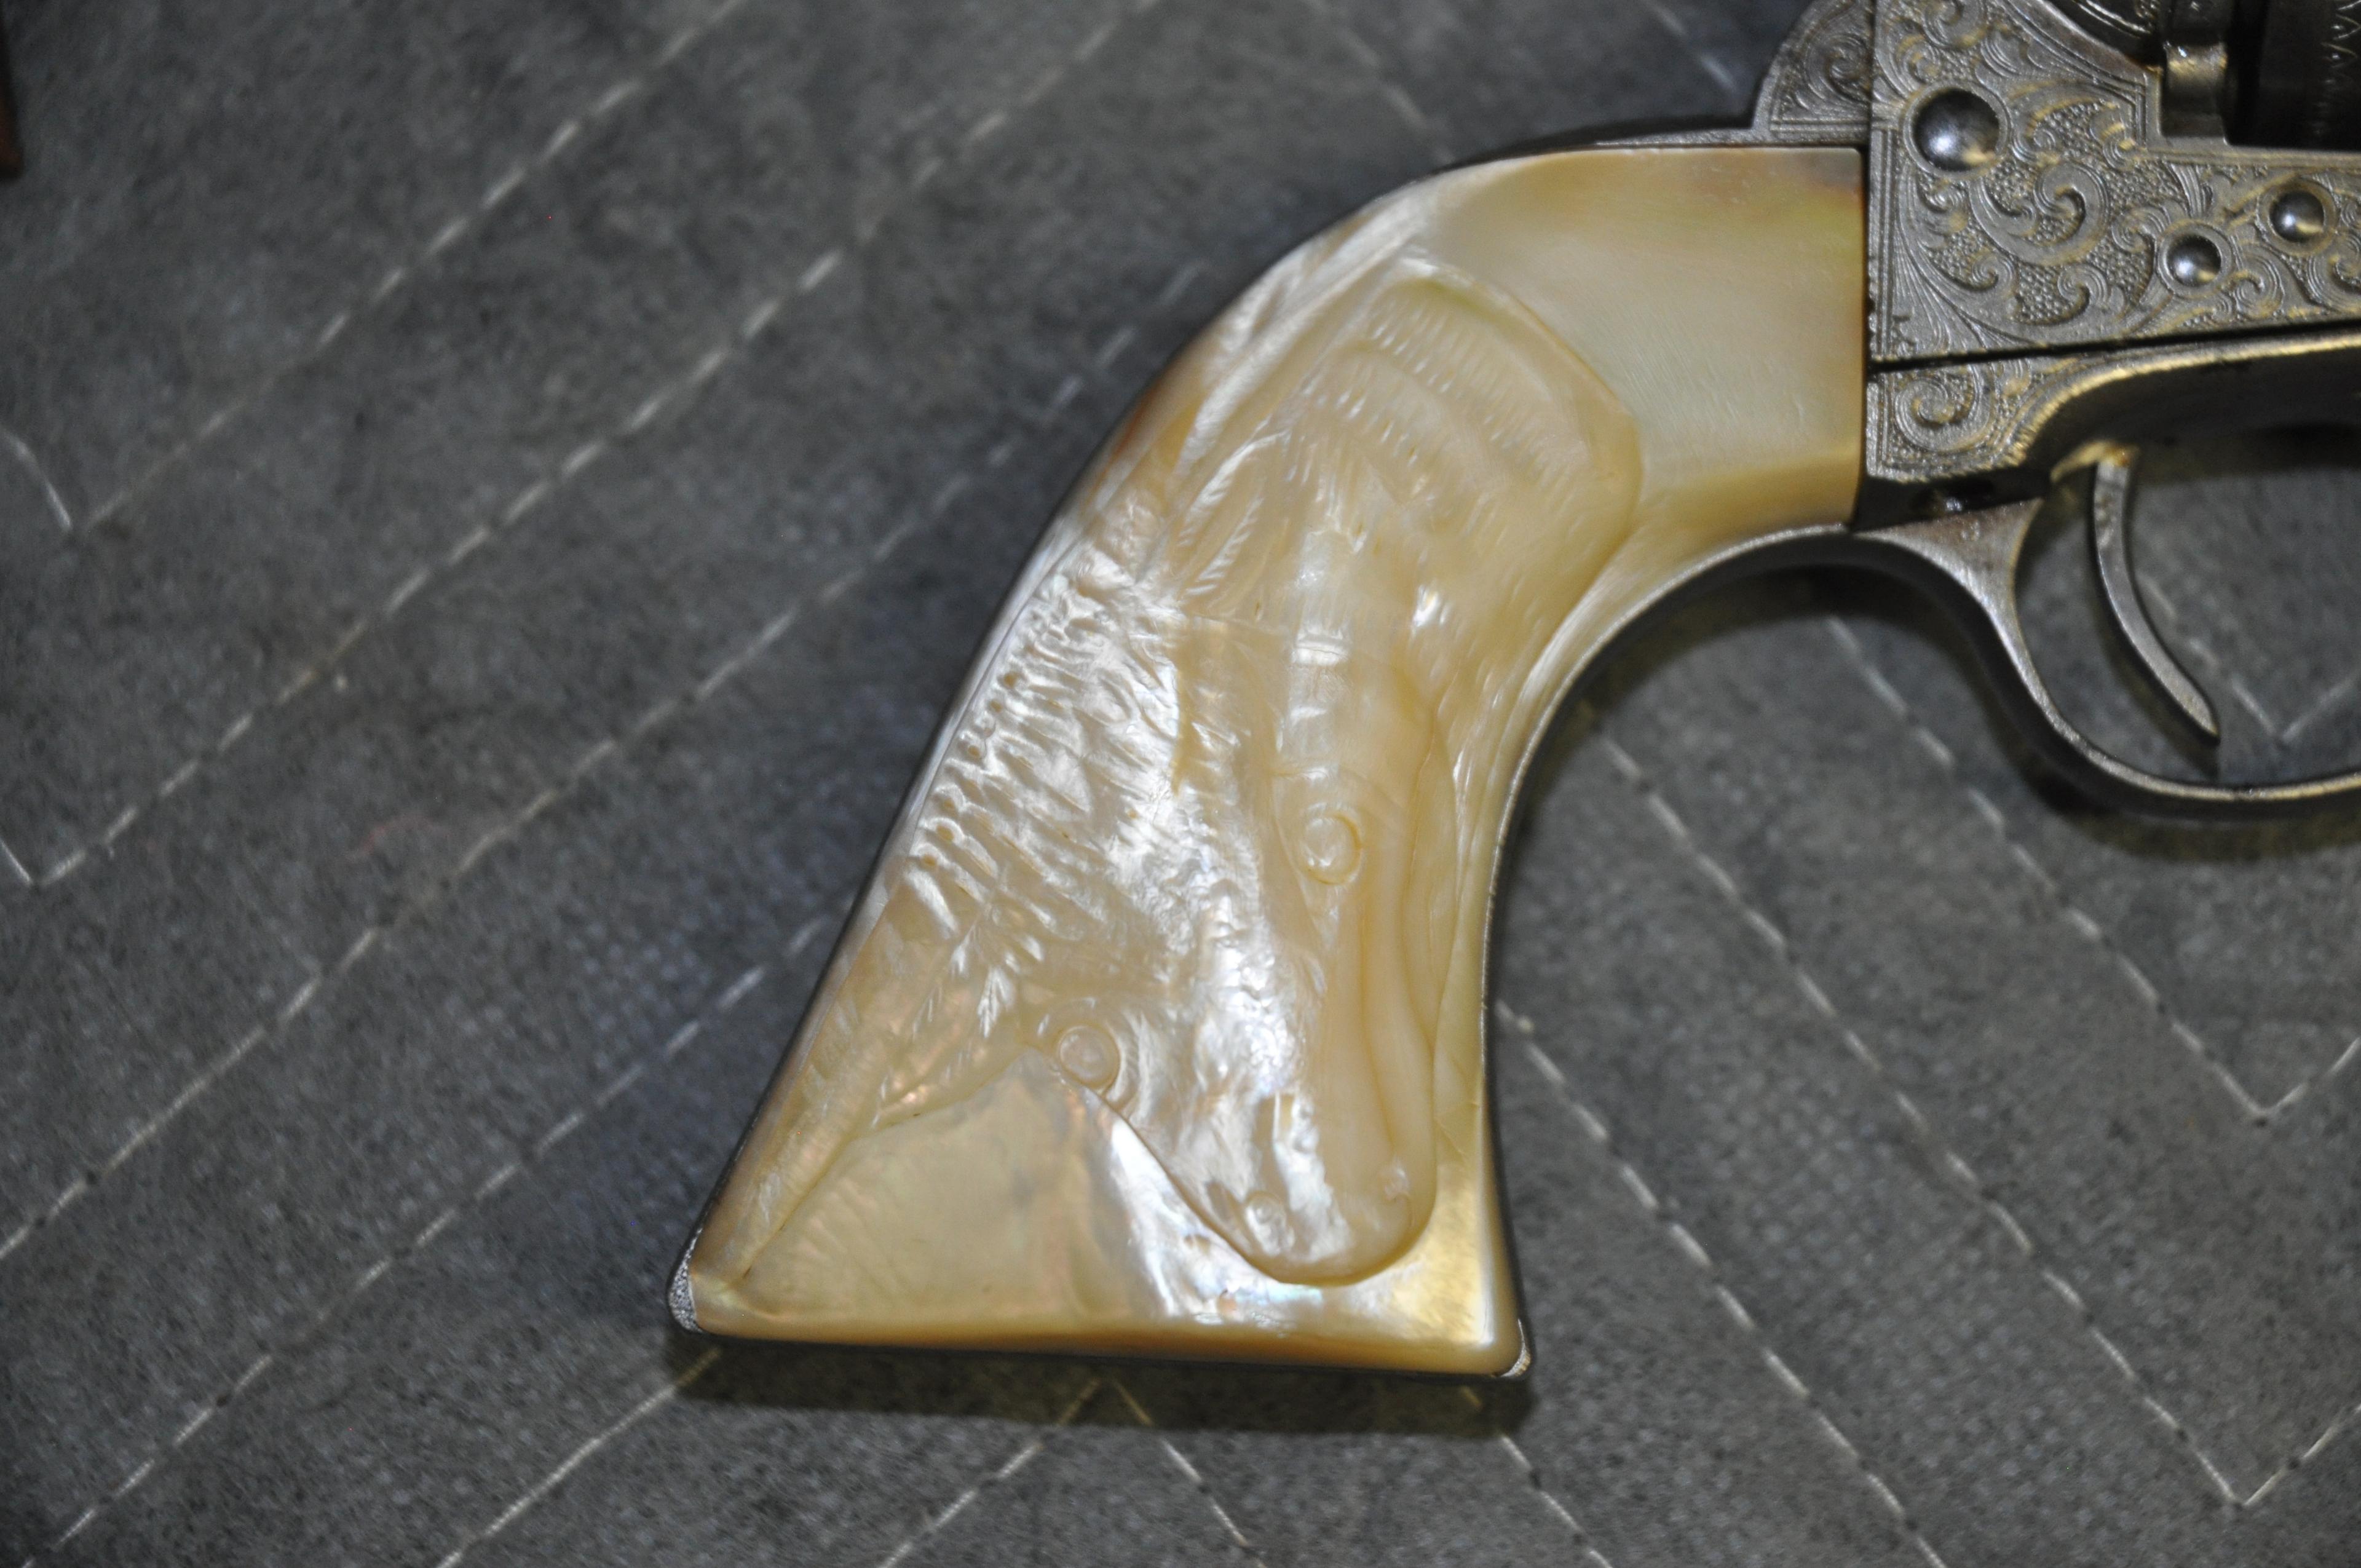 Custom Antique Revolver Display